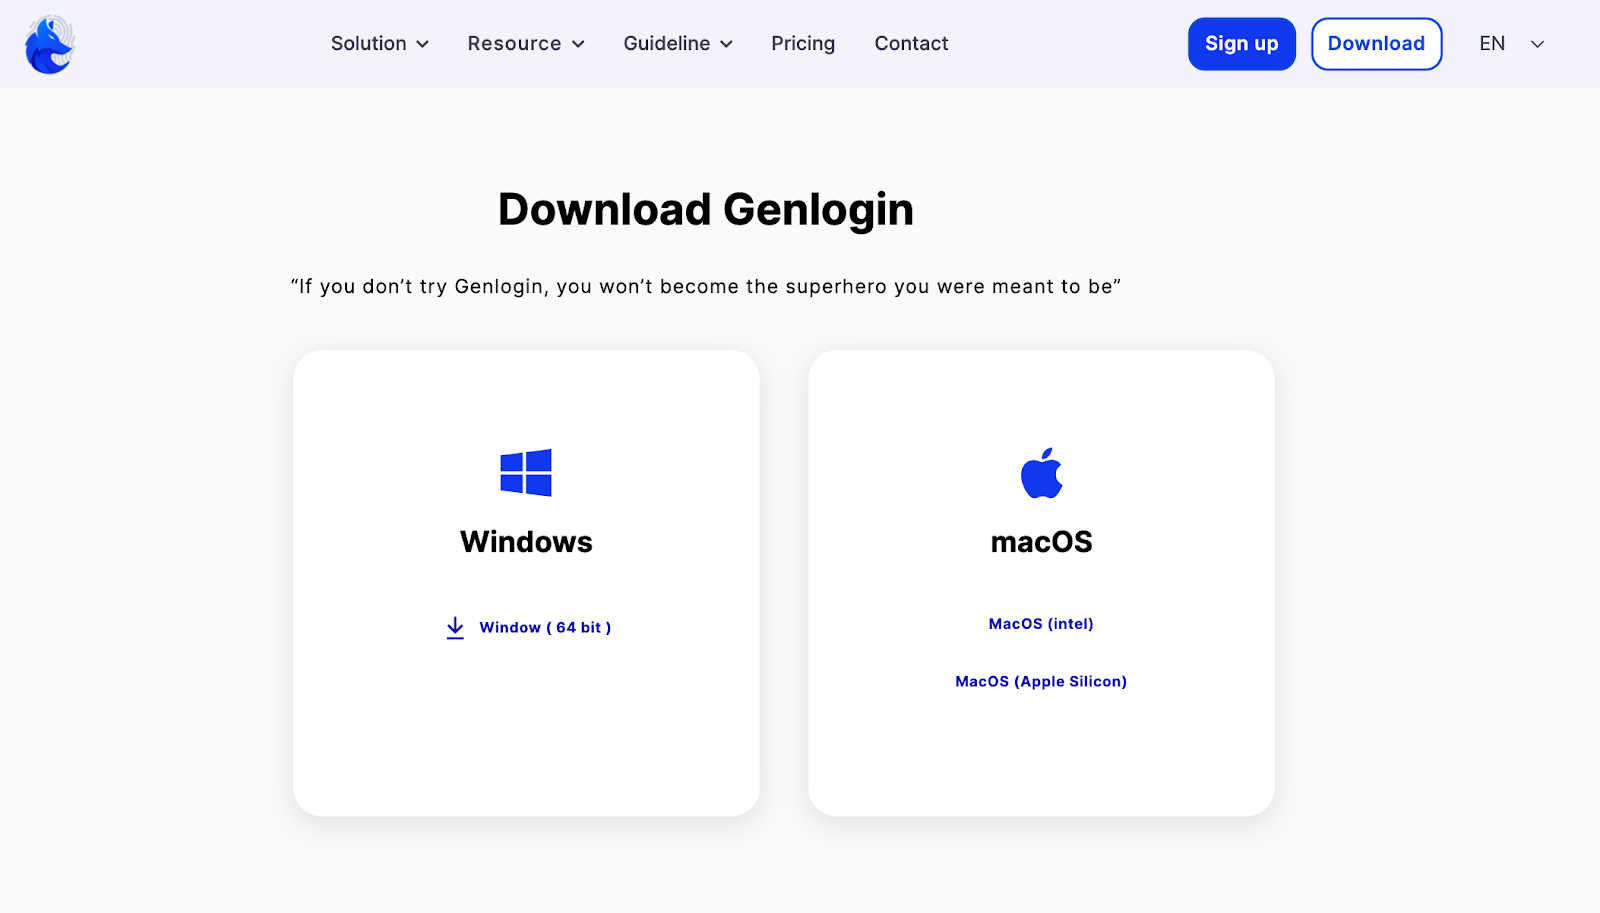 Download Genlogin: